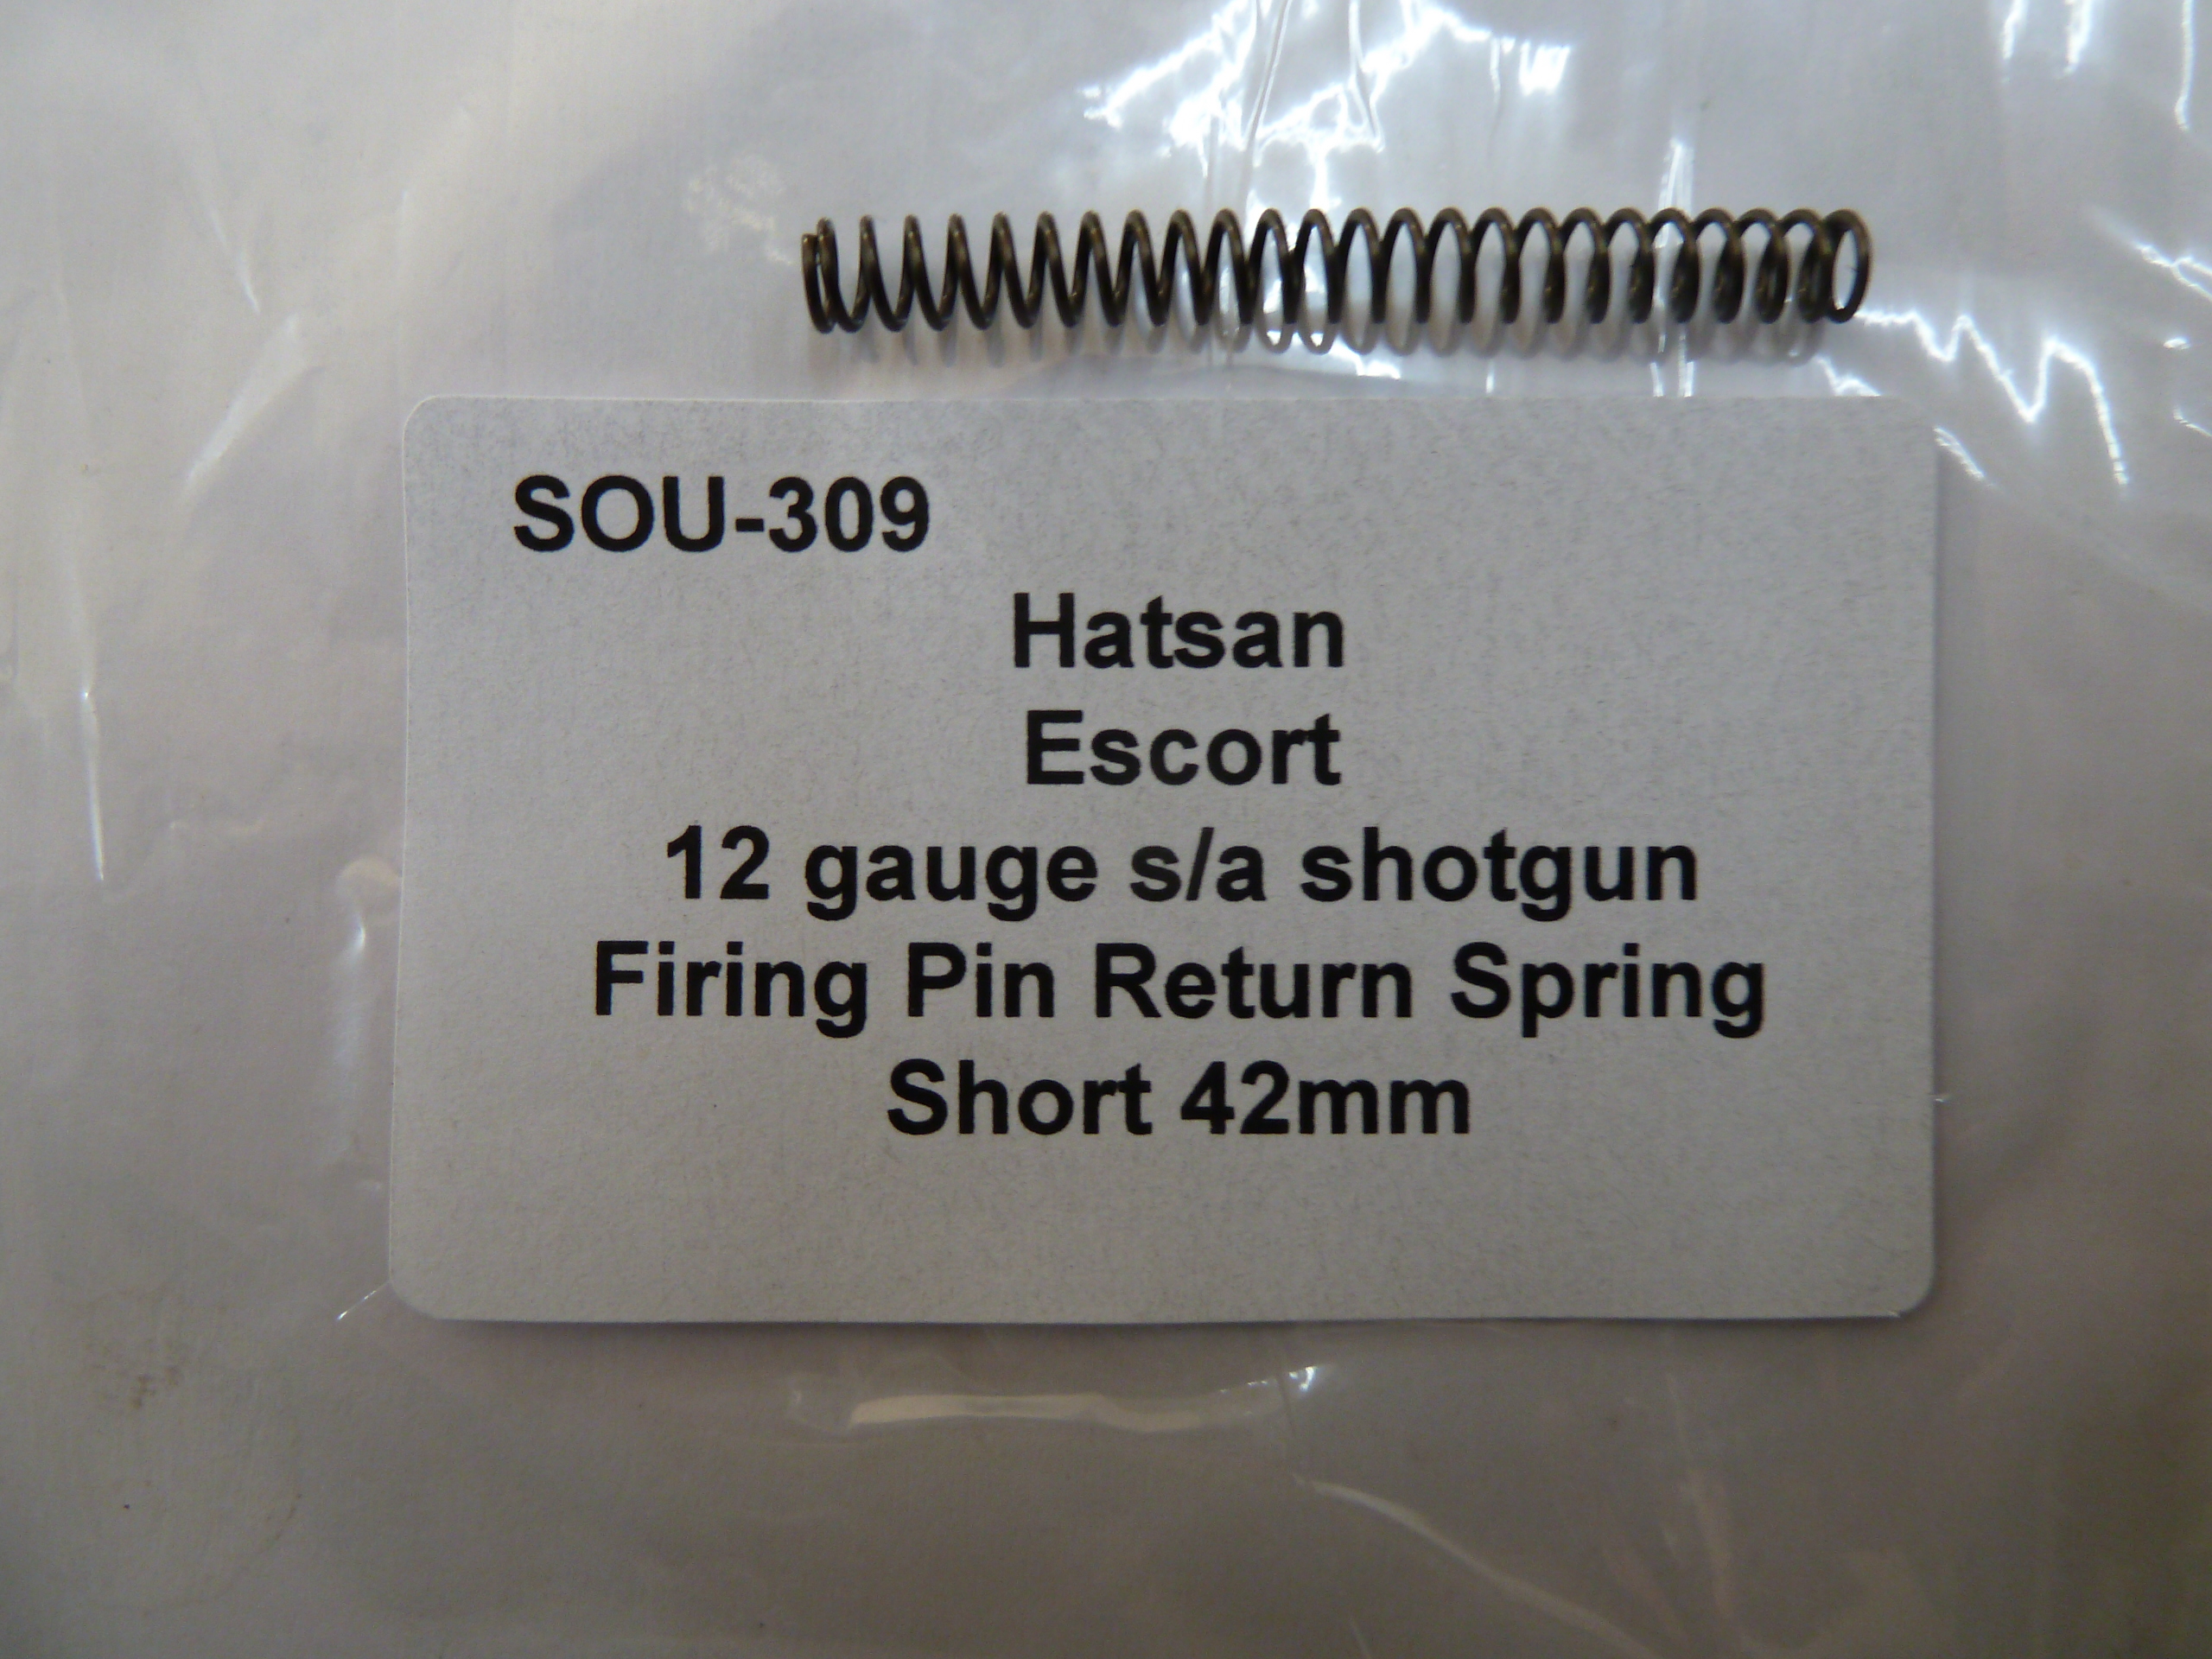 SOU-309 Hatsan Escort 12 gauge firing pin return spring 42mm short (2)